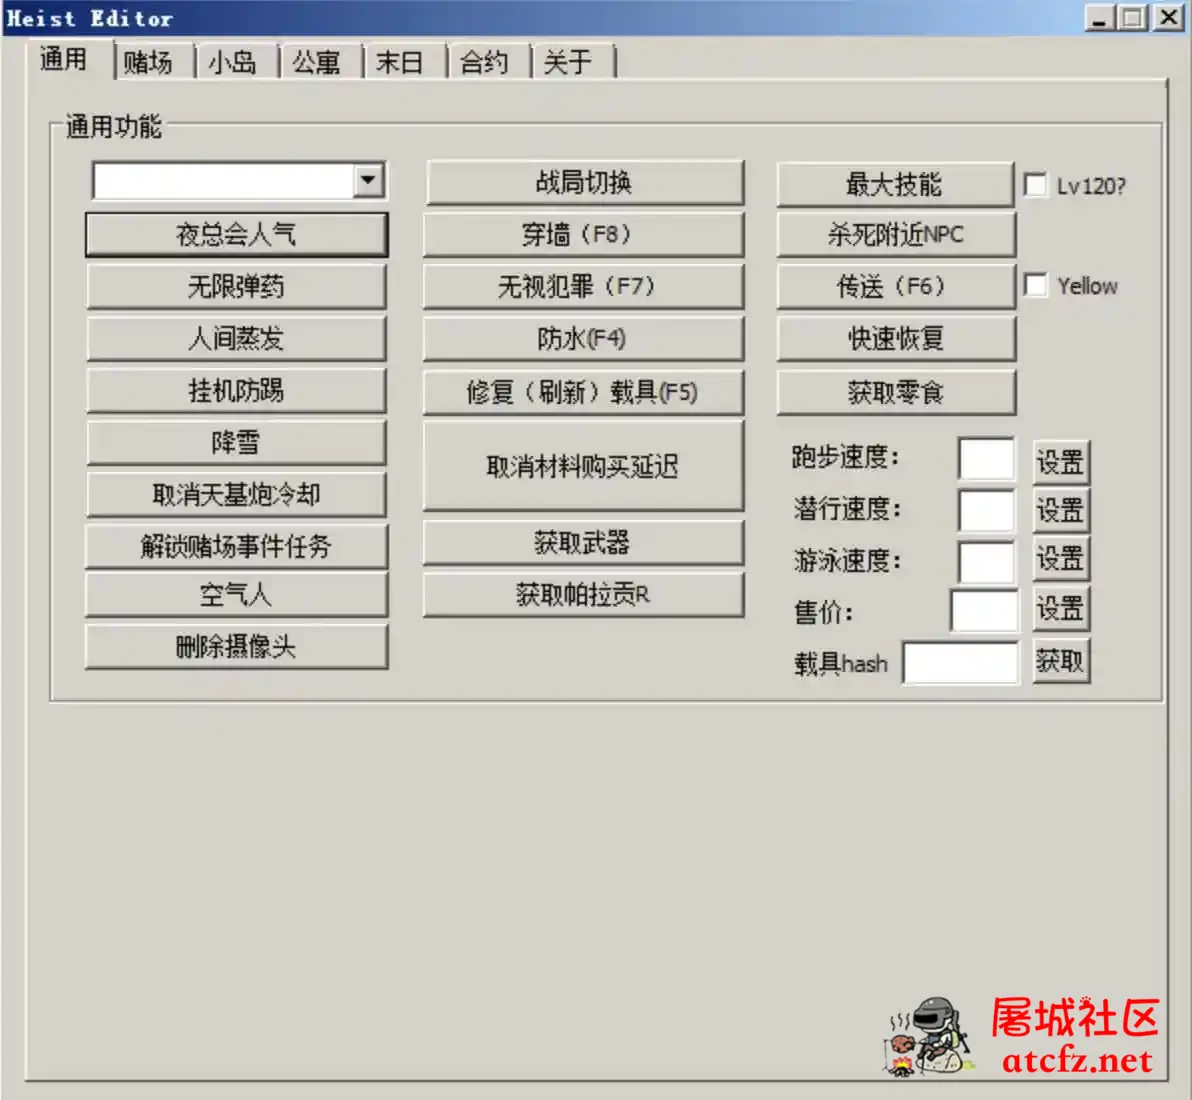 GTA5 Heist Editor外部抢劫编辑器 v3.5.7 屠城辅助网www.tcfz1.com6041